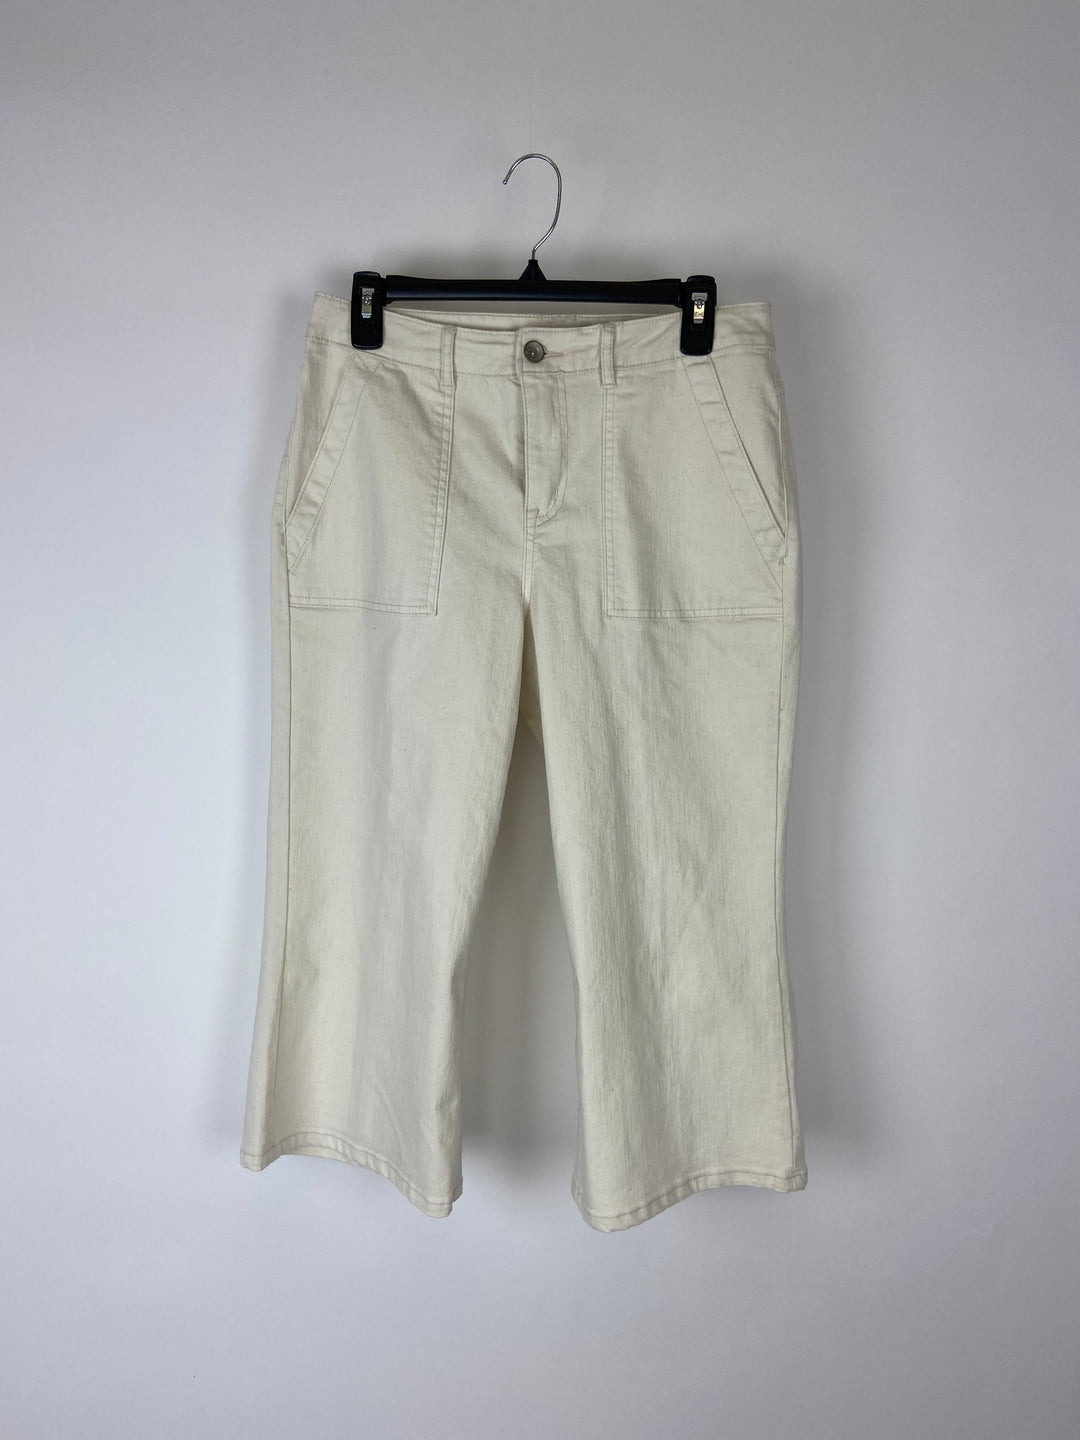 Straight Leg Cream Colored Capri Denim Jeans - Size 8